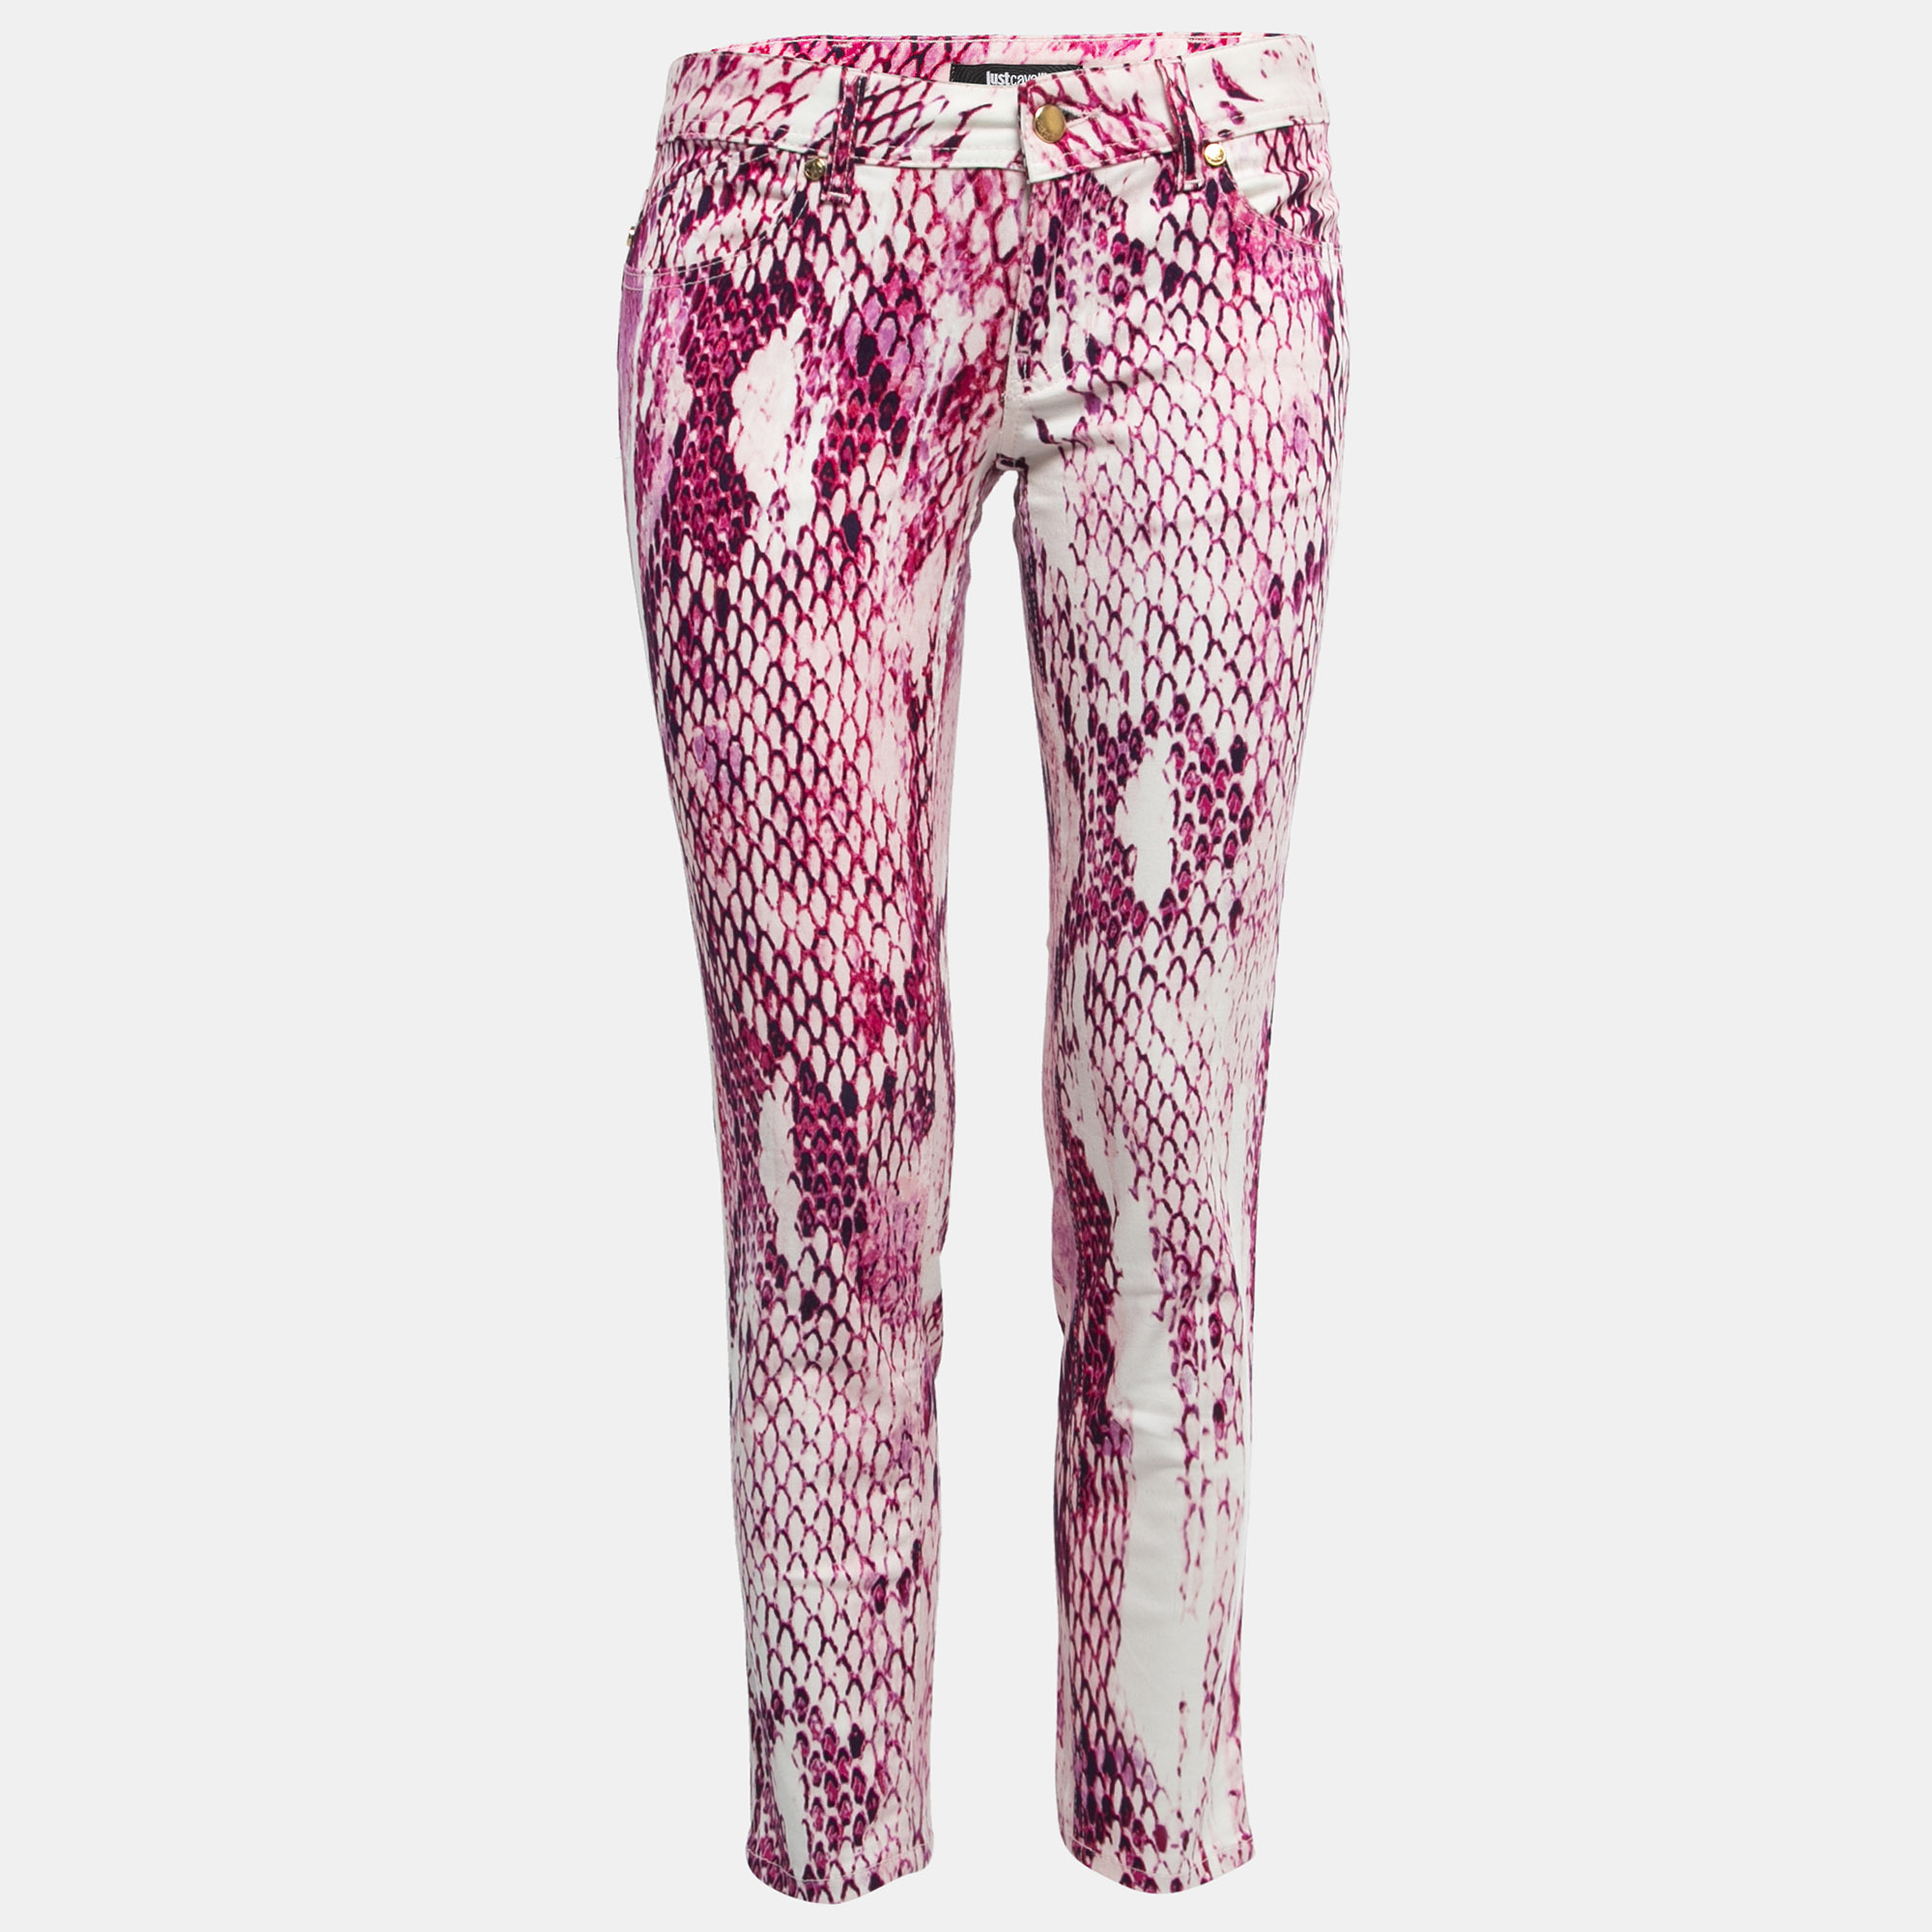 Just Cavalli Pink Snake Printed Denim Skinny Jeans S Waist 26